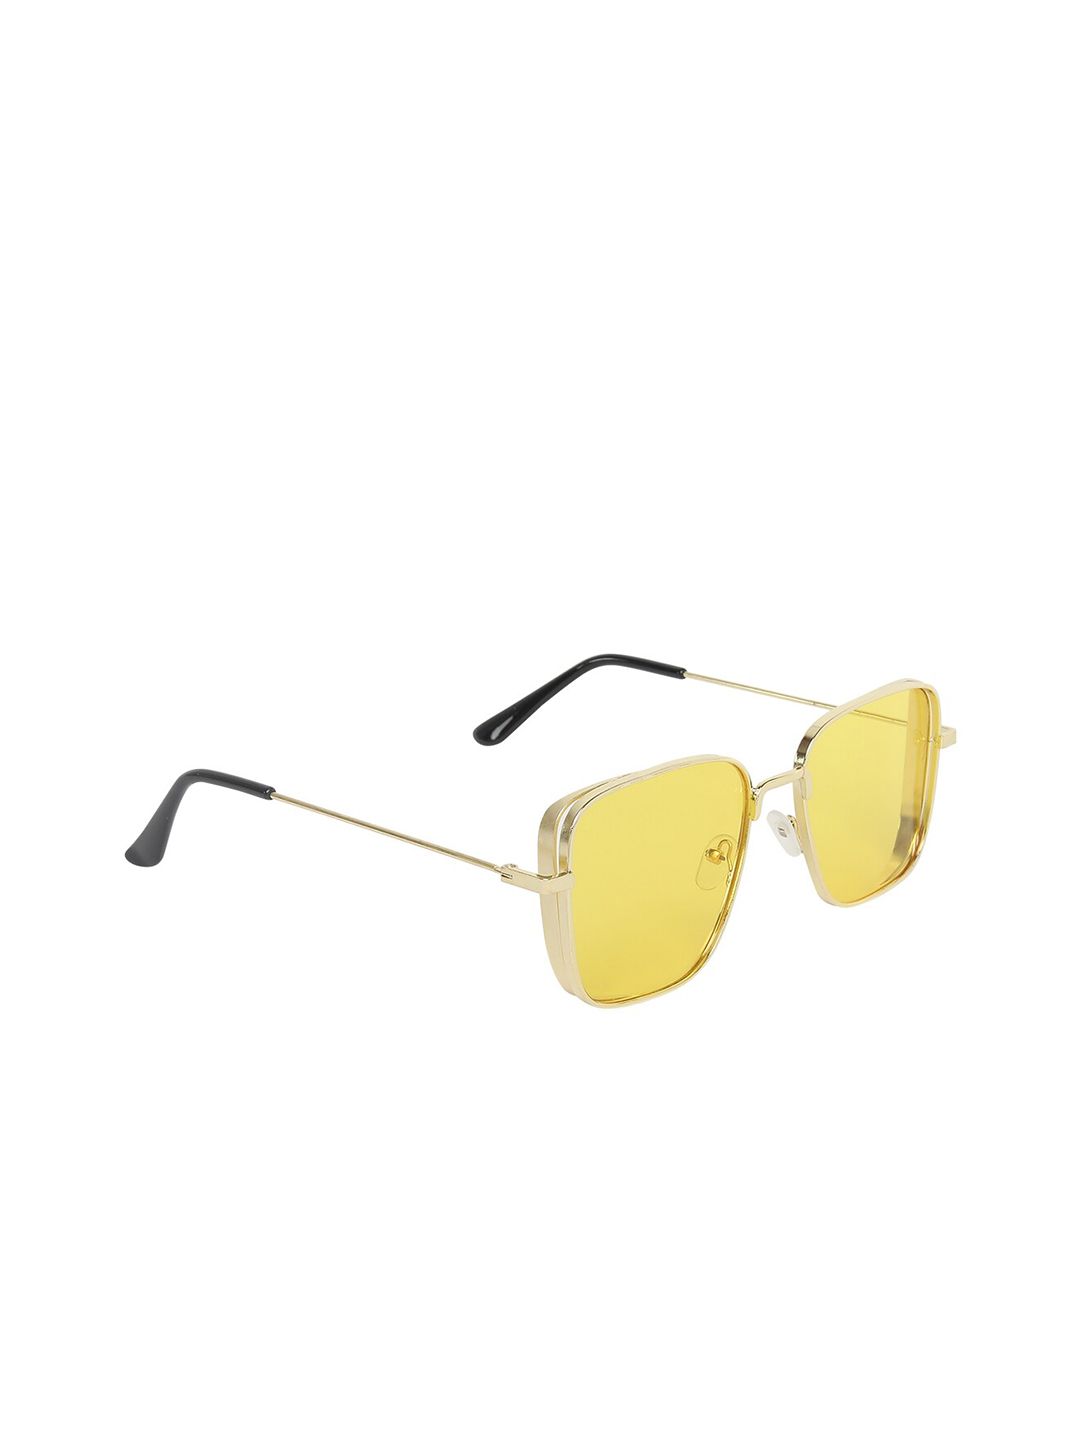 ALIGATORR Unisex Yellow Lens & Gold-Toned UV Protected Square Sunglasses AGR_GOLD Price in India